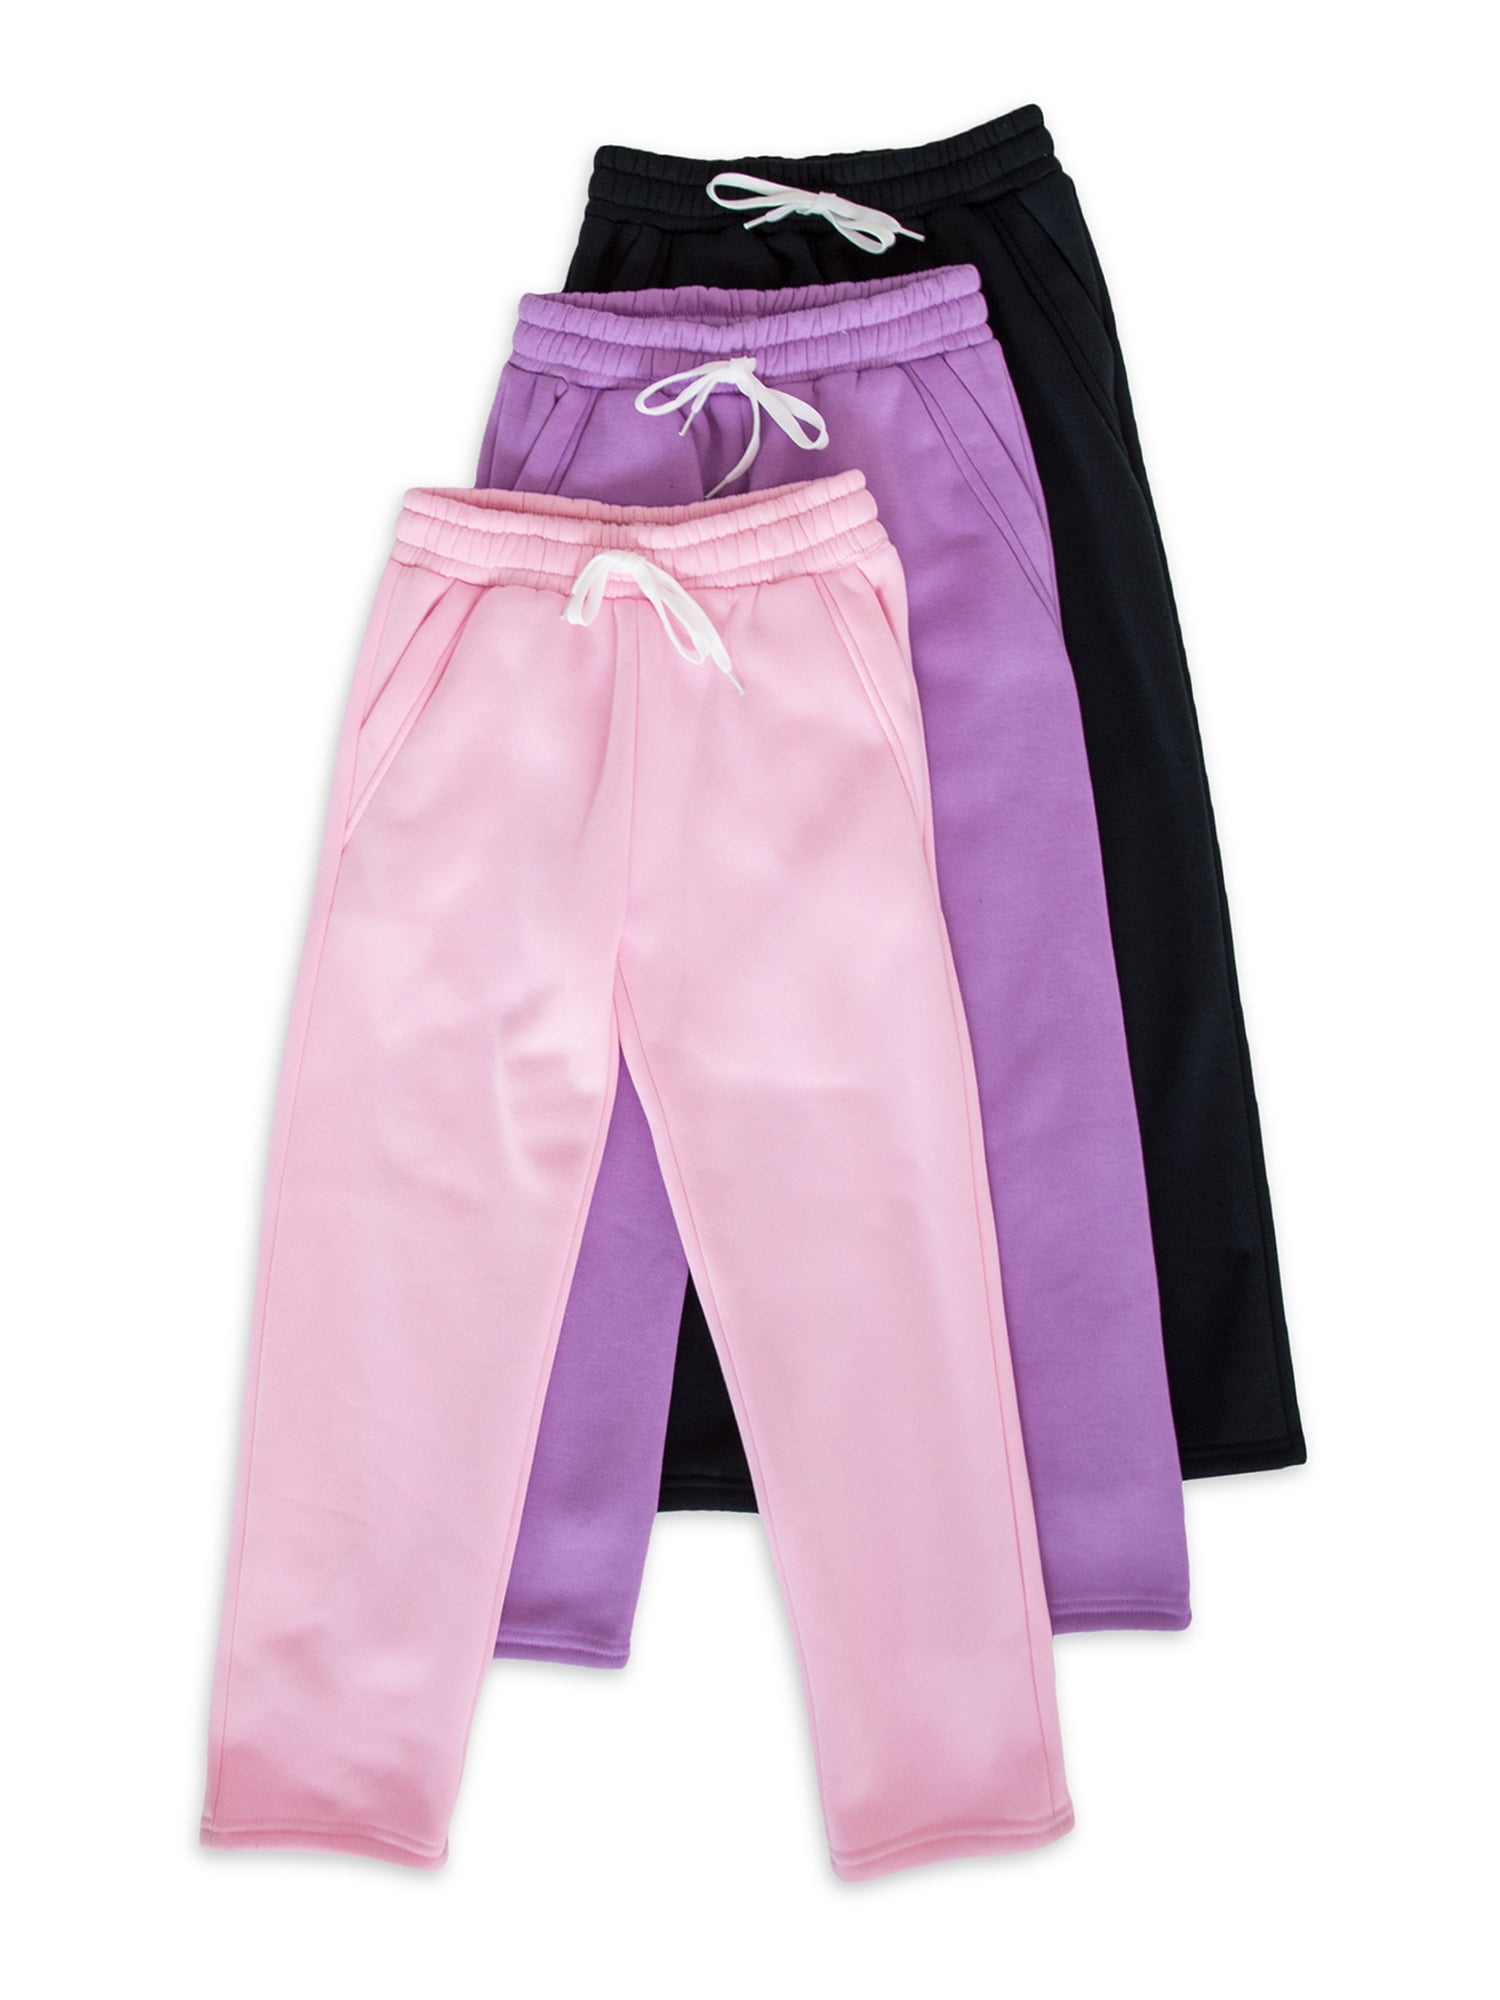 Real Essentials Girls Fleece Open Bottom Leg Sweatpants with Pockets  3-Pack, Sizes 7-18